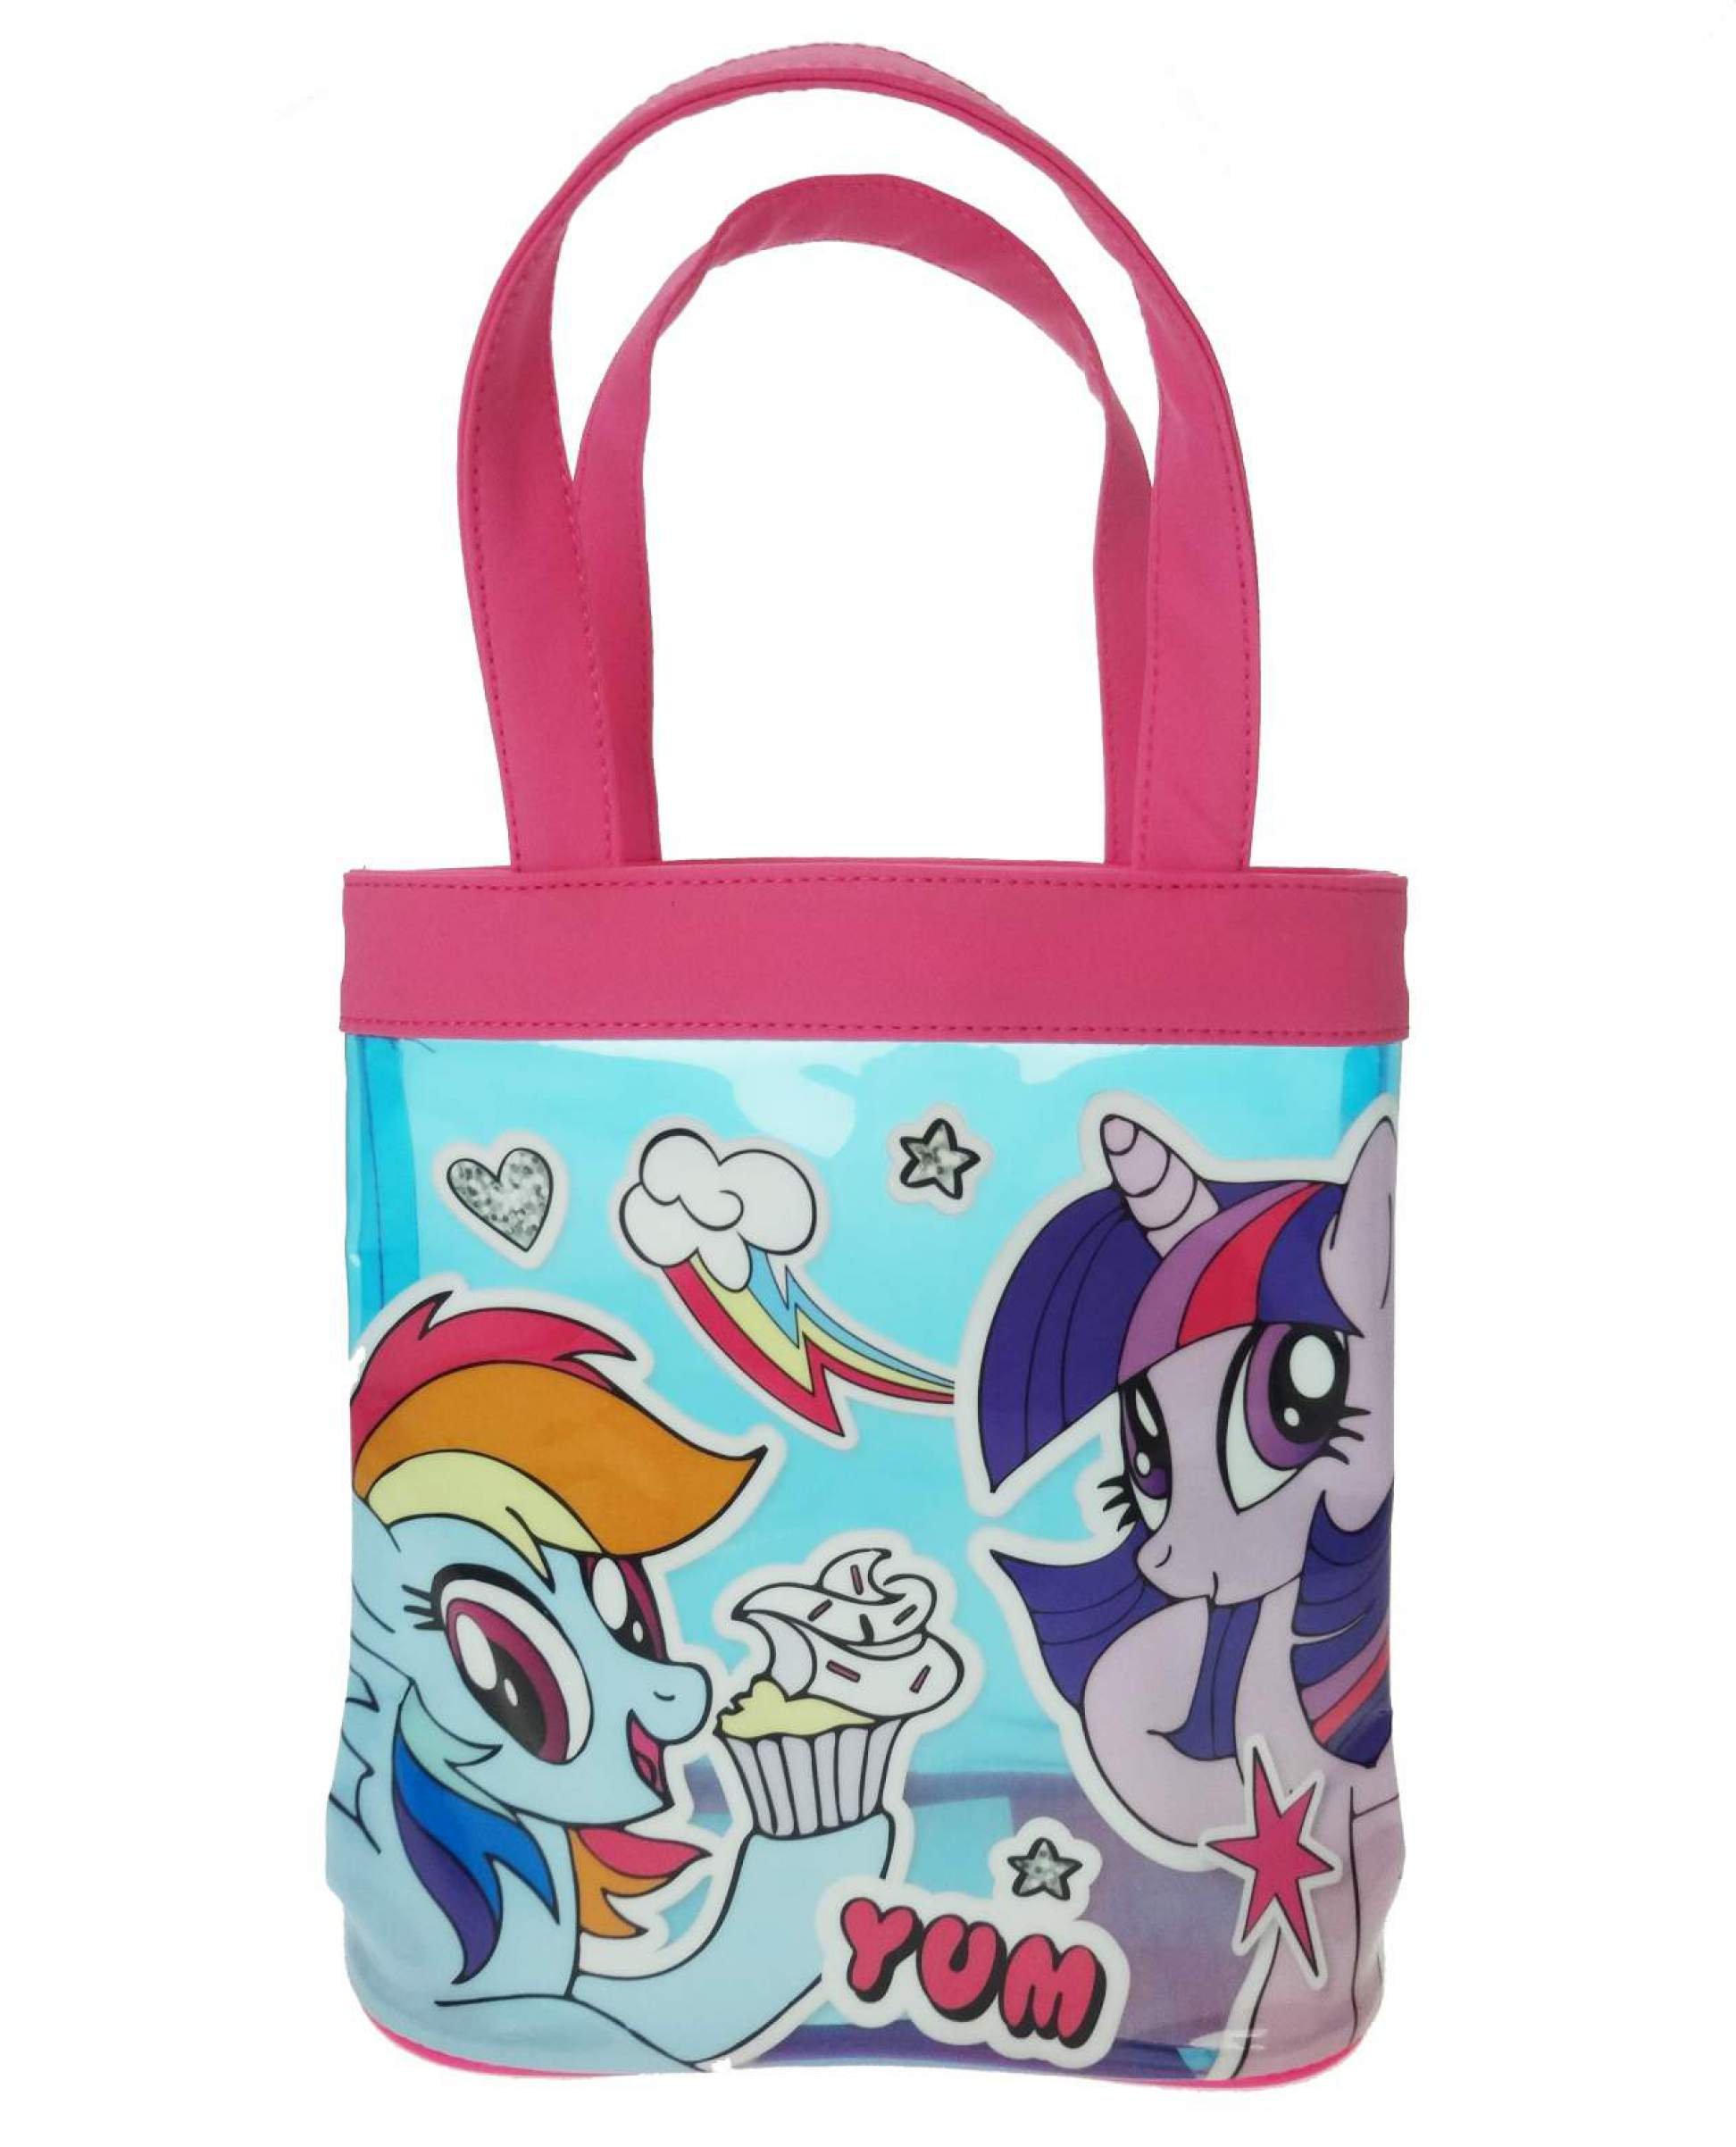 My Little Pony 'Yum' Tote Bag Shopping Shopper